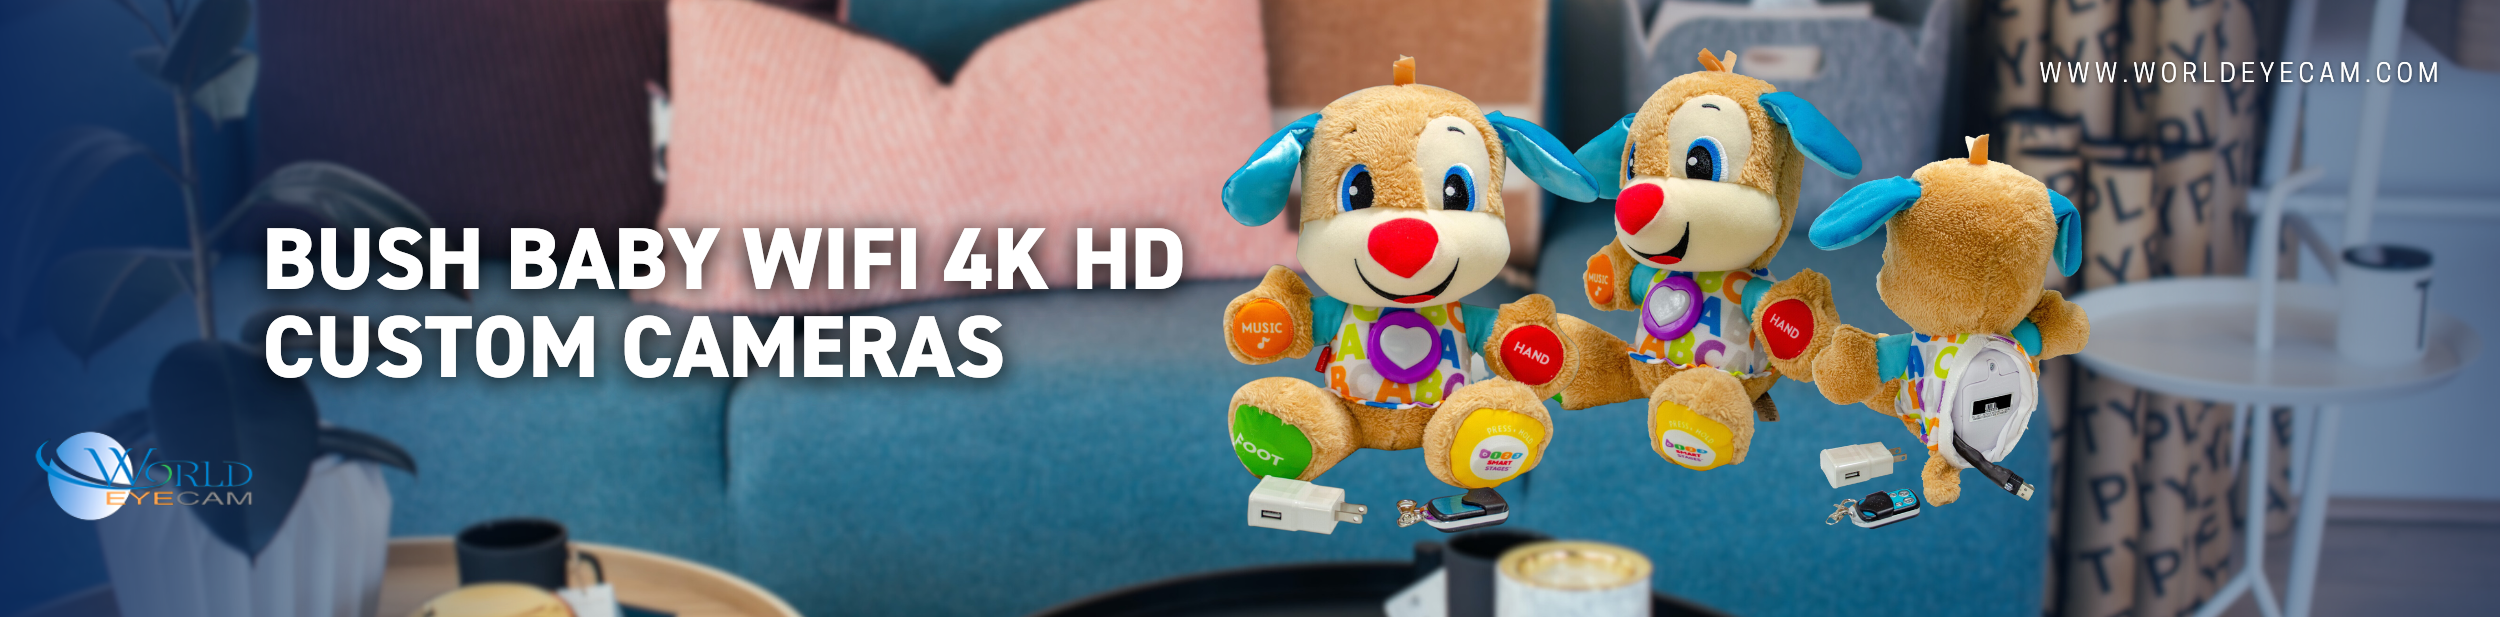 BUSH BABY WI-FI 4K HD CUSTOM CAMERAS